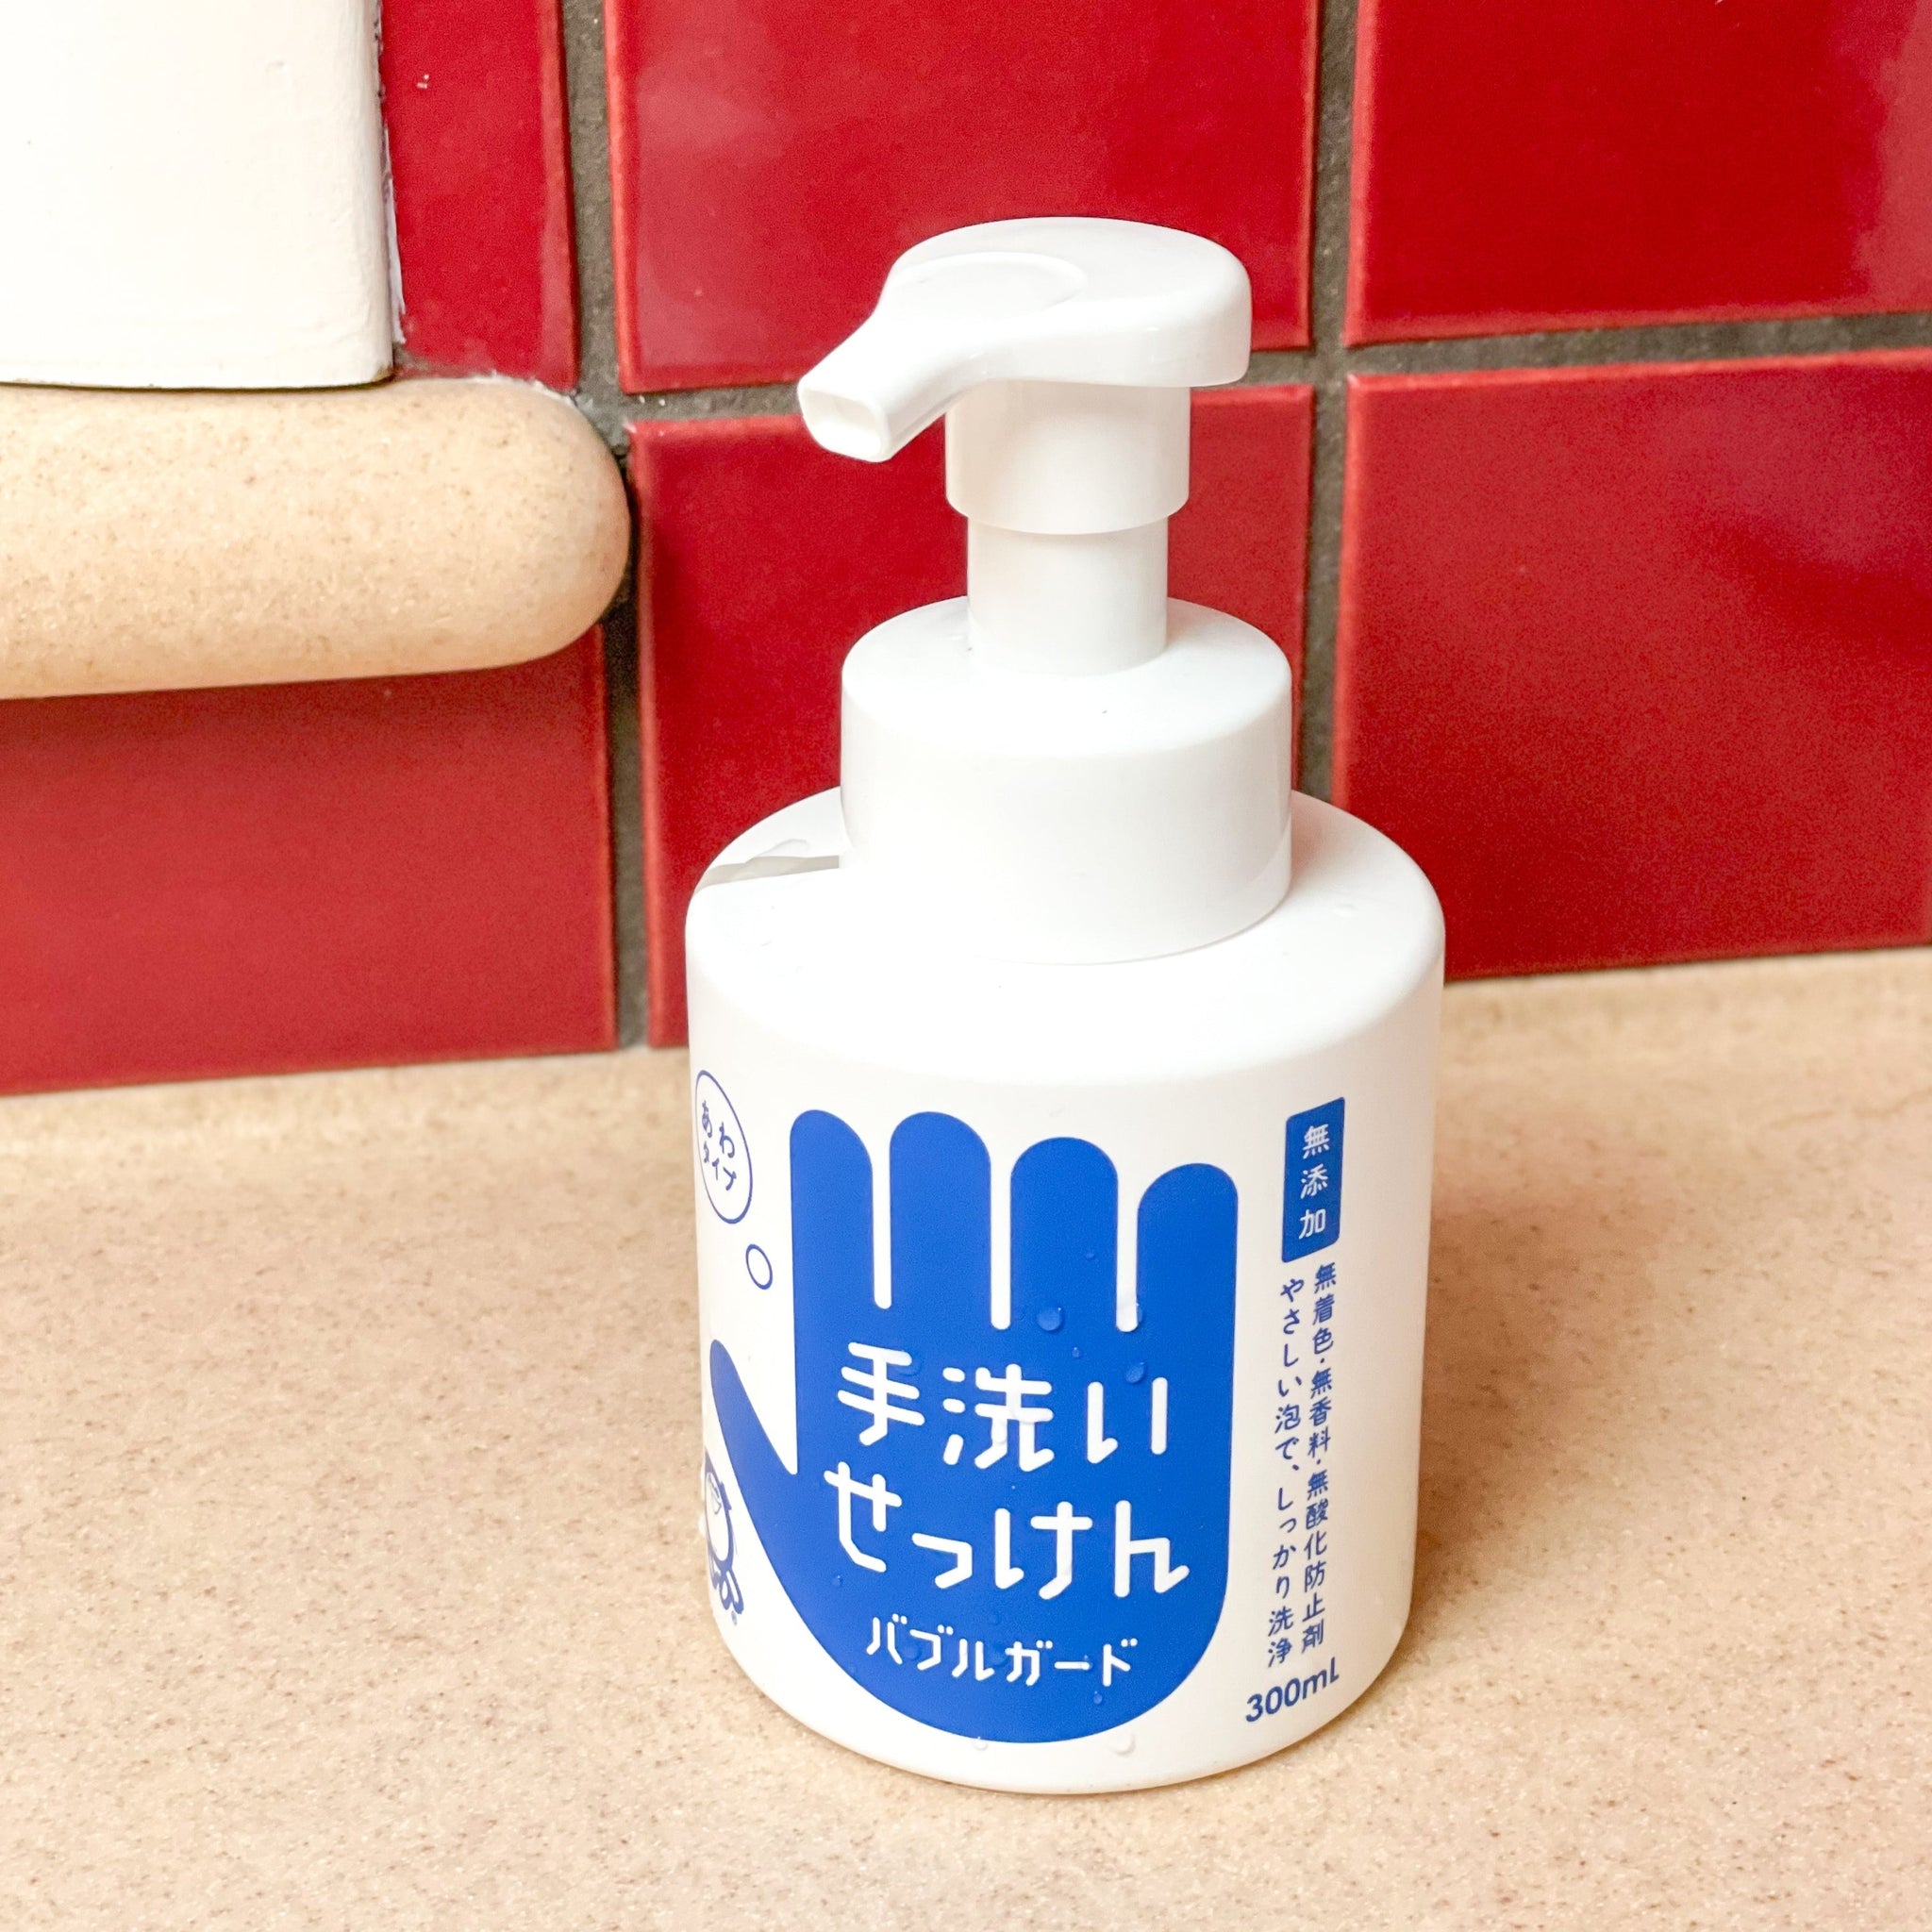 Bubble Guard Hand Soap ハンドソープ バブルガード